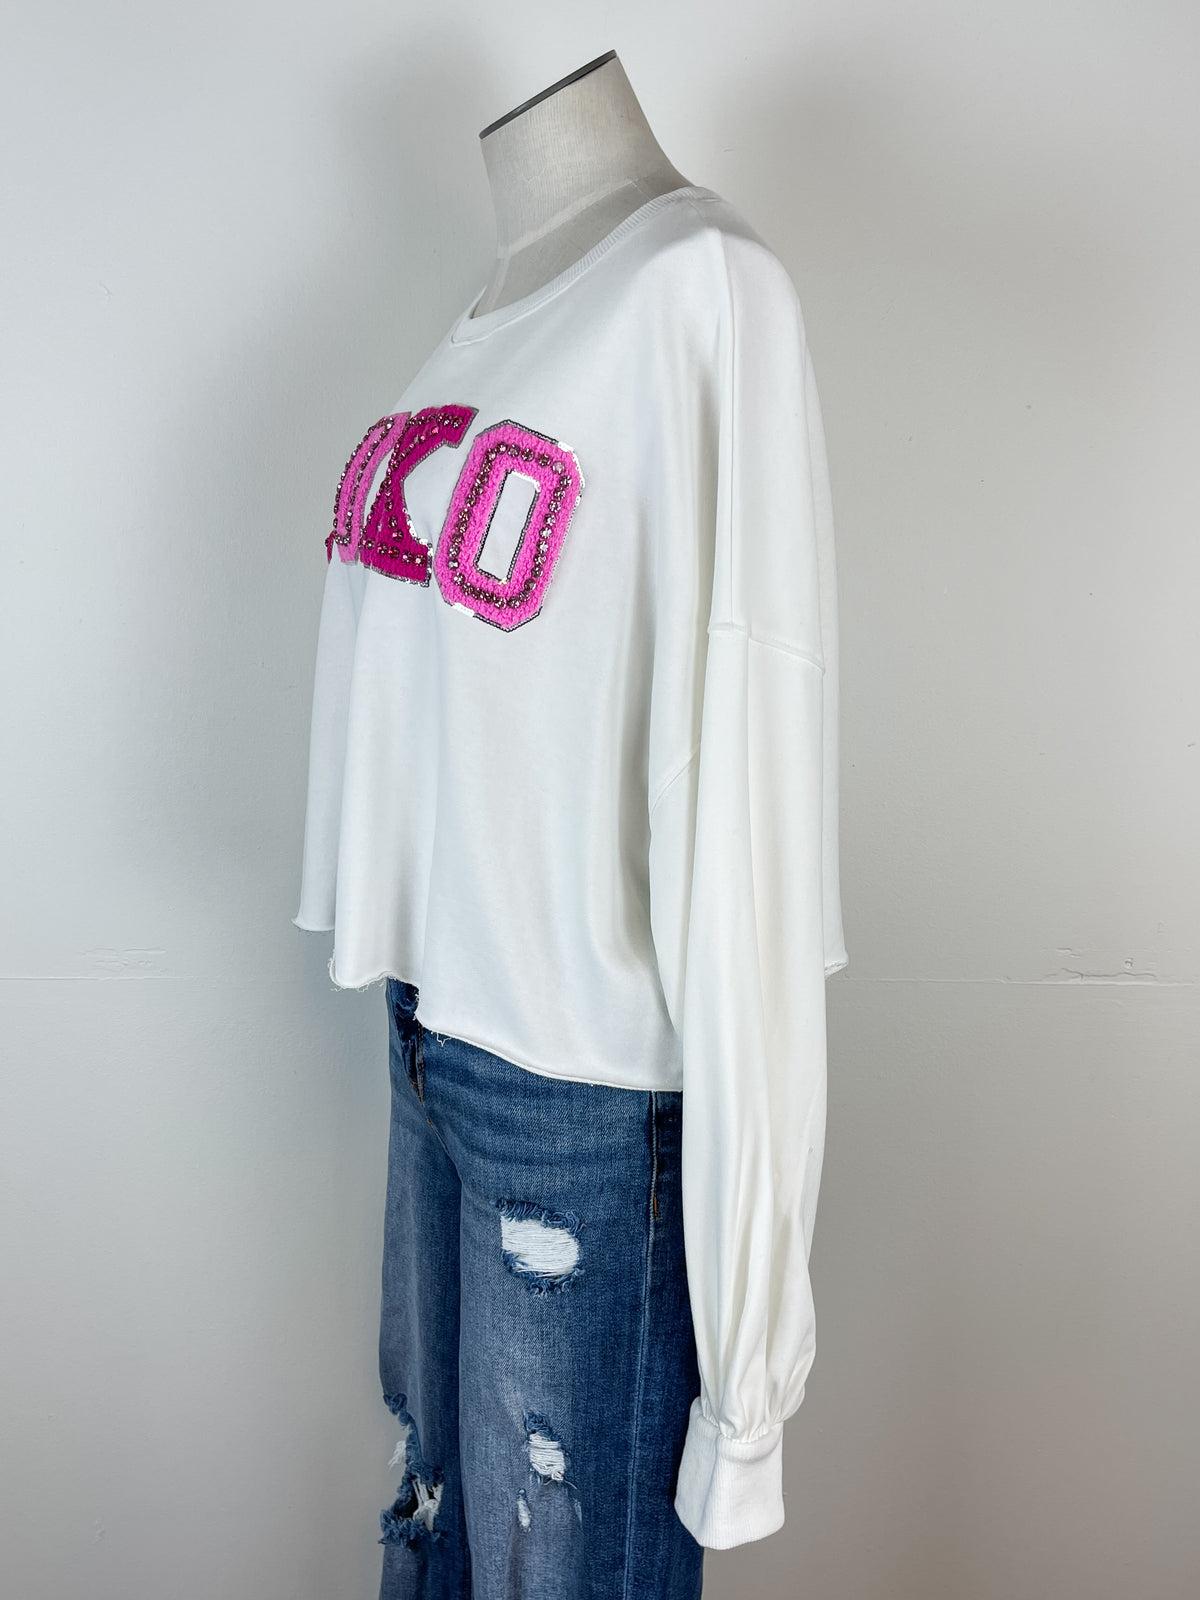 XOXO Cropped Sweatshirt in White